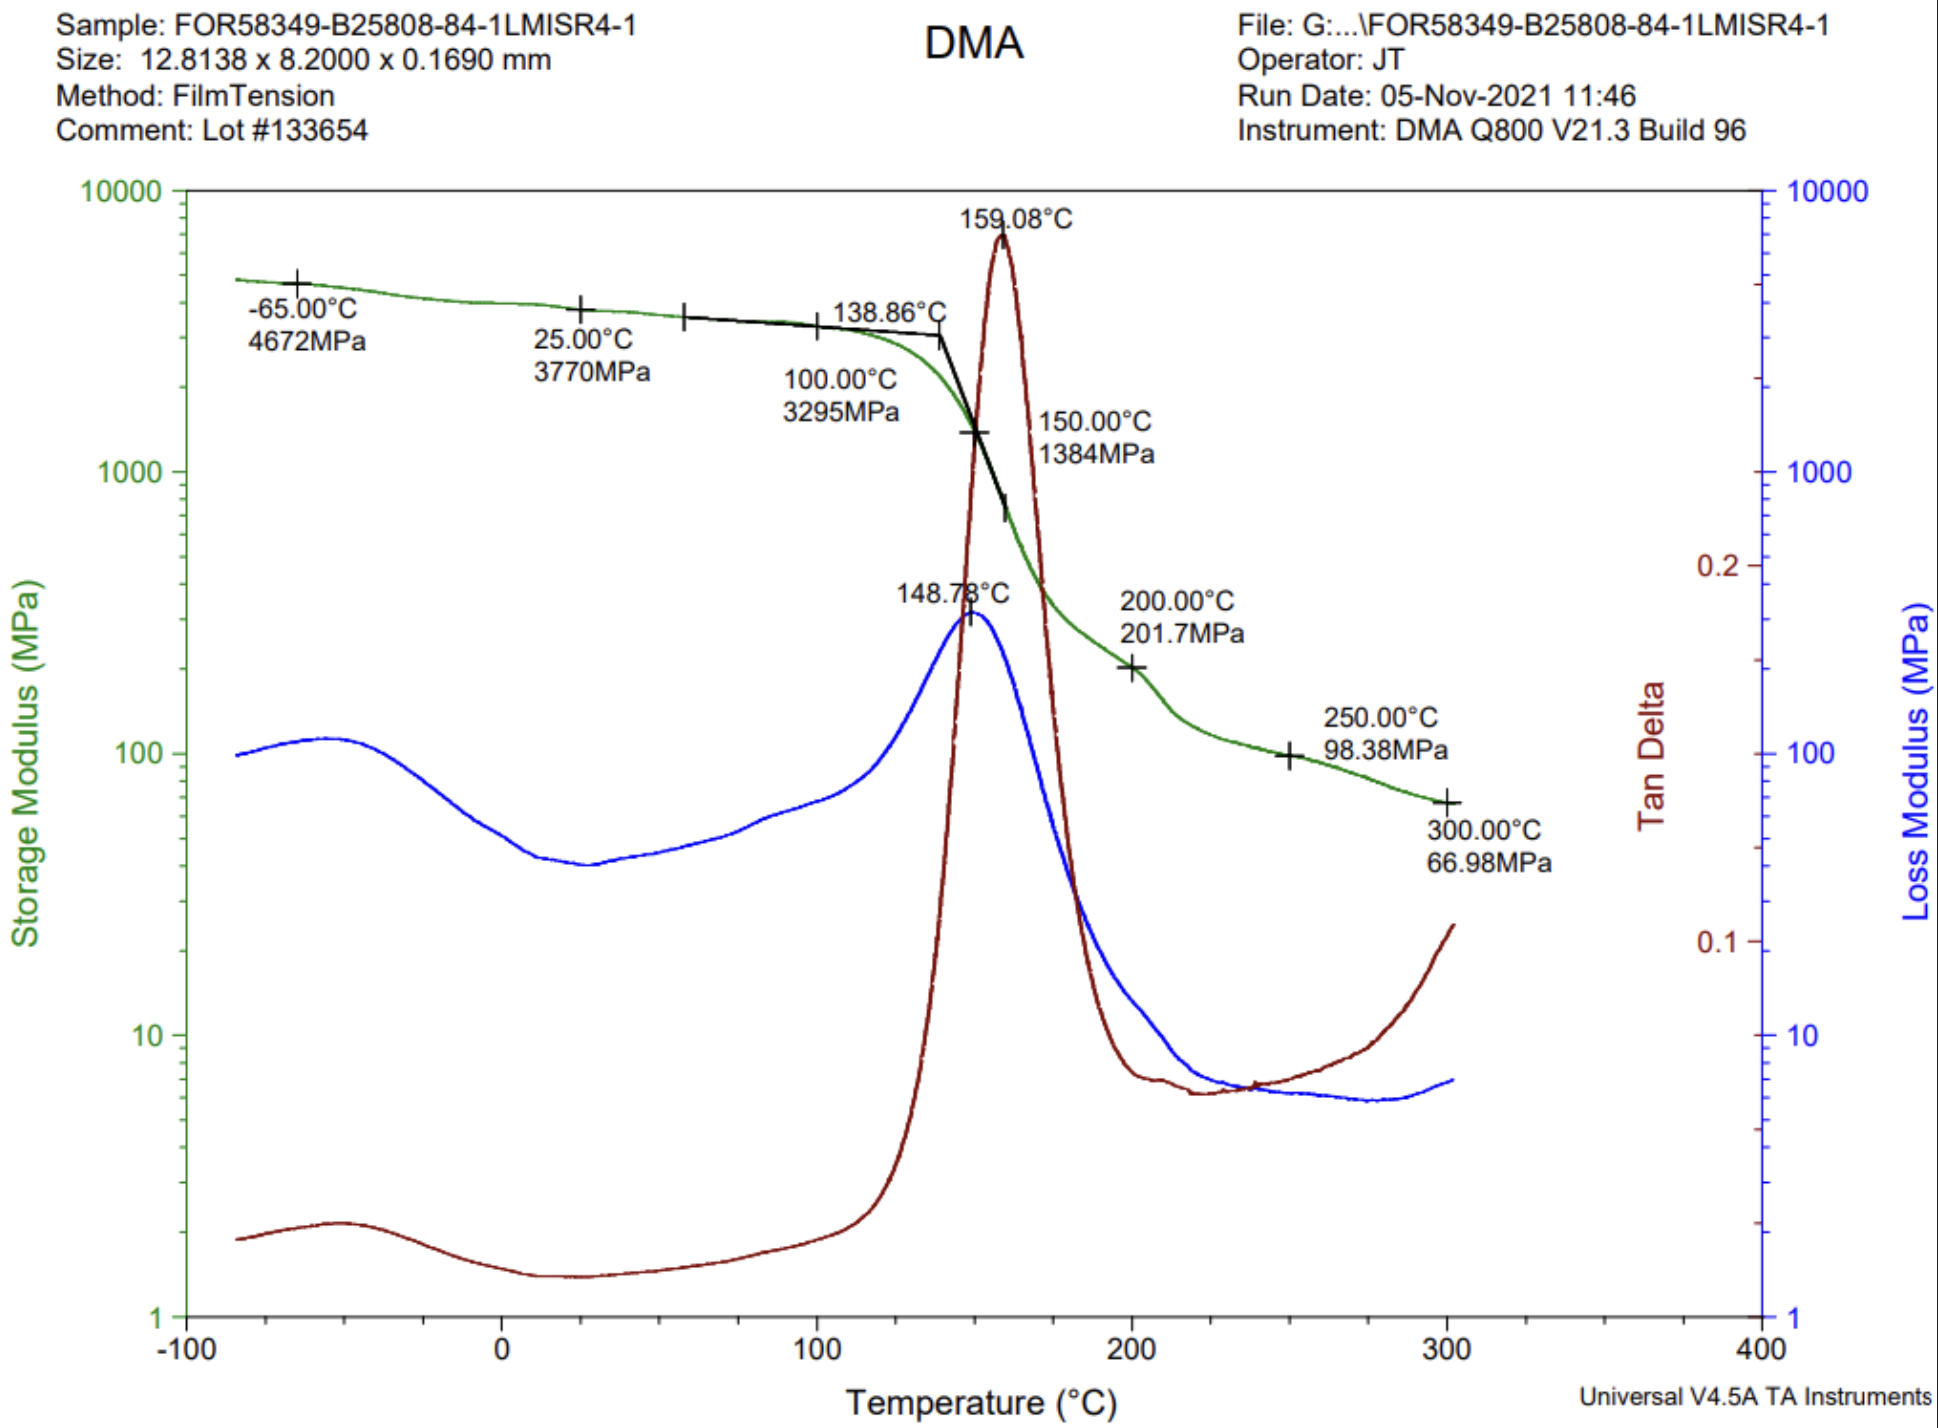 DMA Curve of 84-1LMISR4